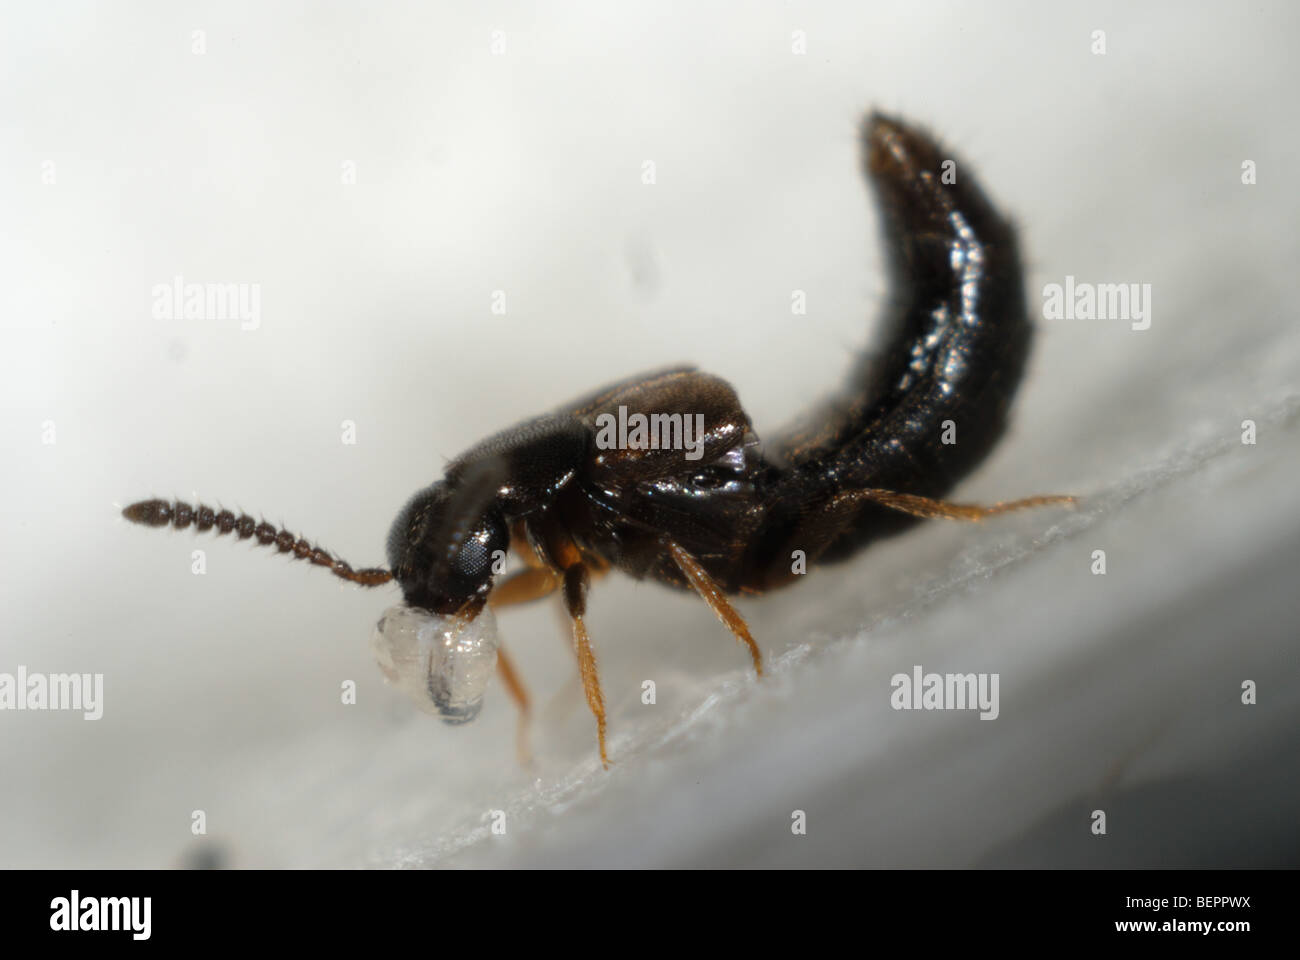 Adult predatory greenhouse rove beetle, Dalotia coriaria, feeding on a dipteran larva used for biological control Stock Photo